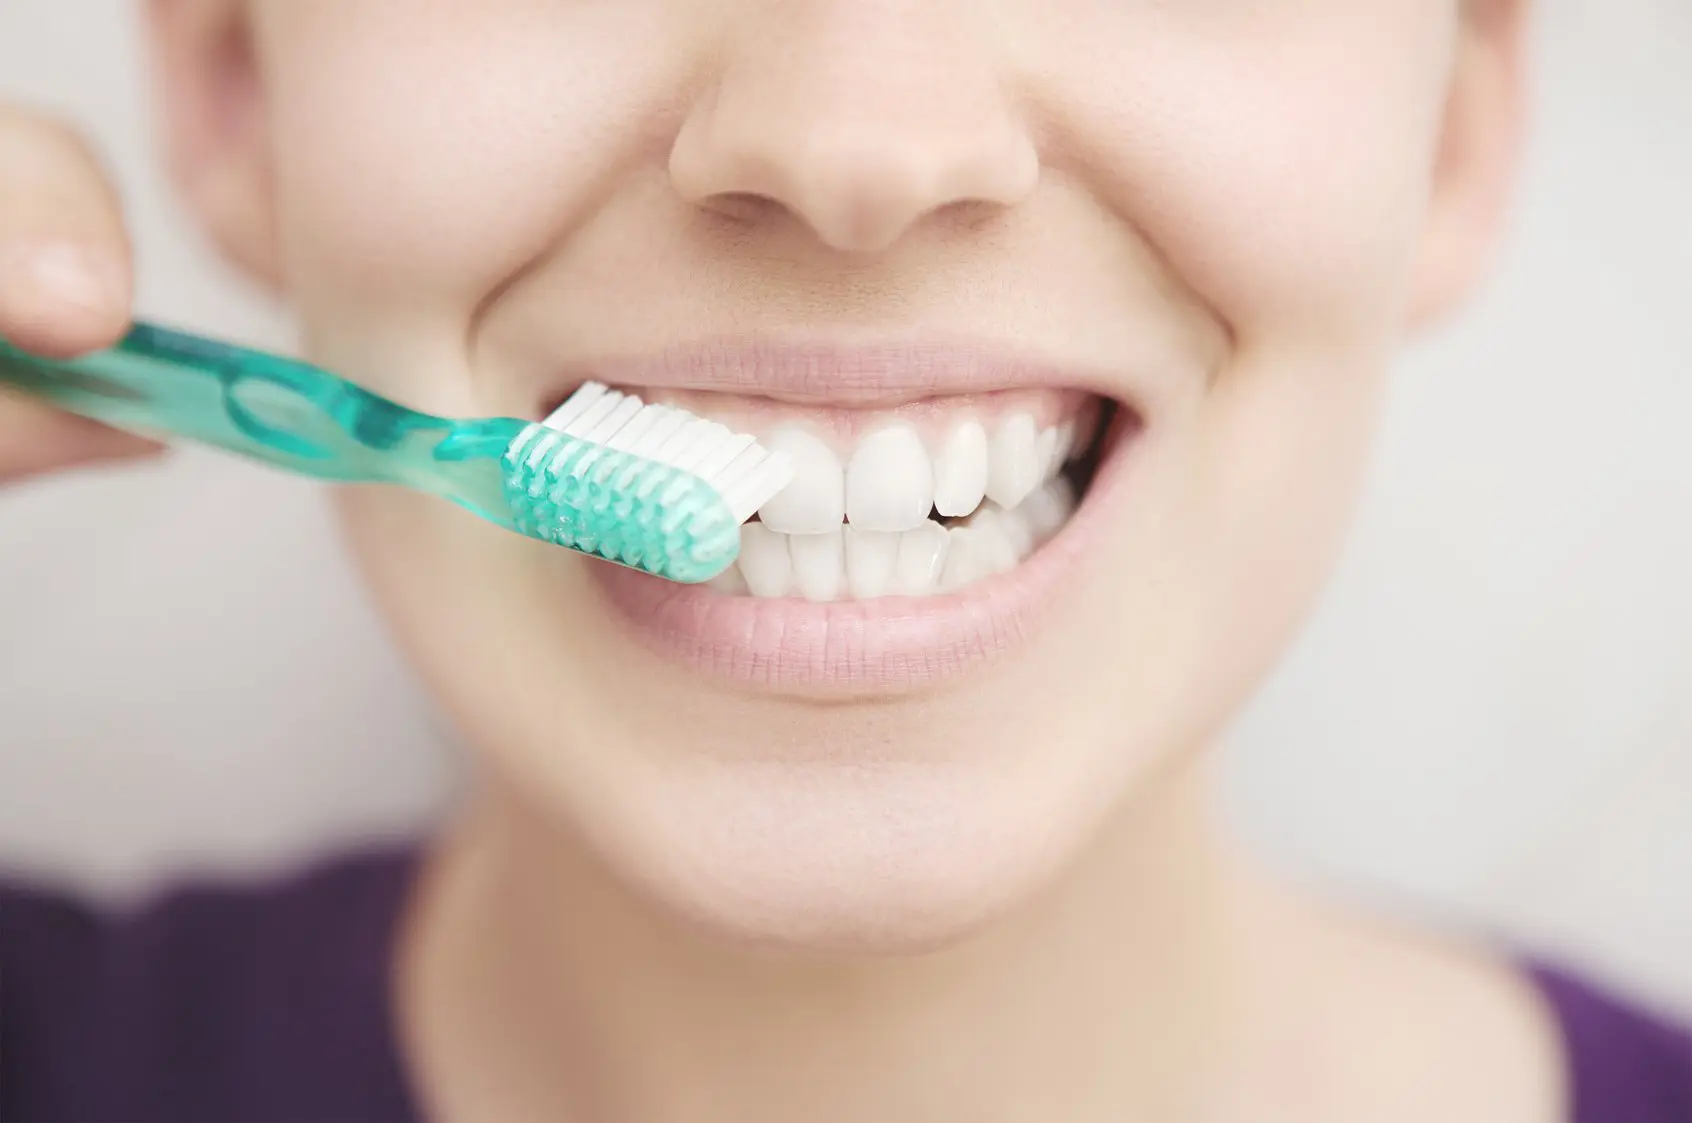 https://www.blodgettdentalcare.com/wp-content/uploads/2020/06/brushing-teeth-image.jpg.webp